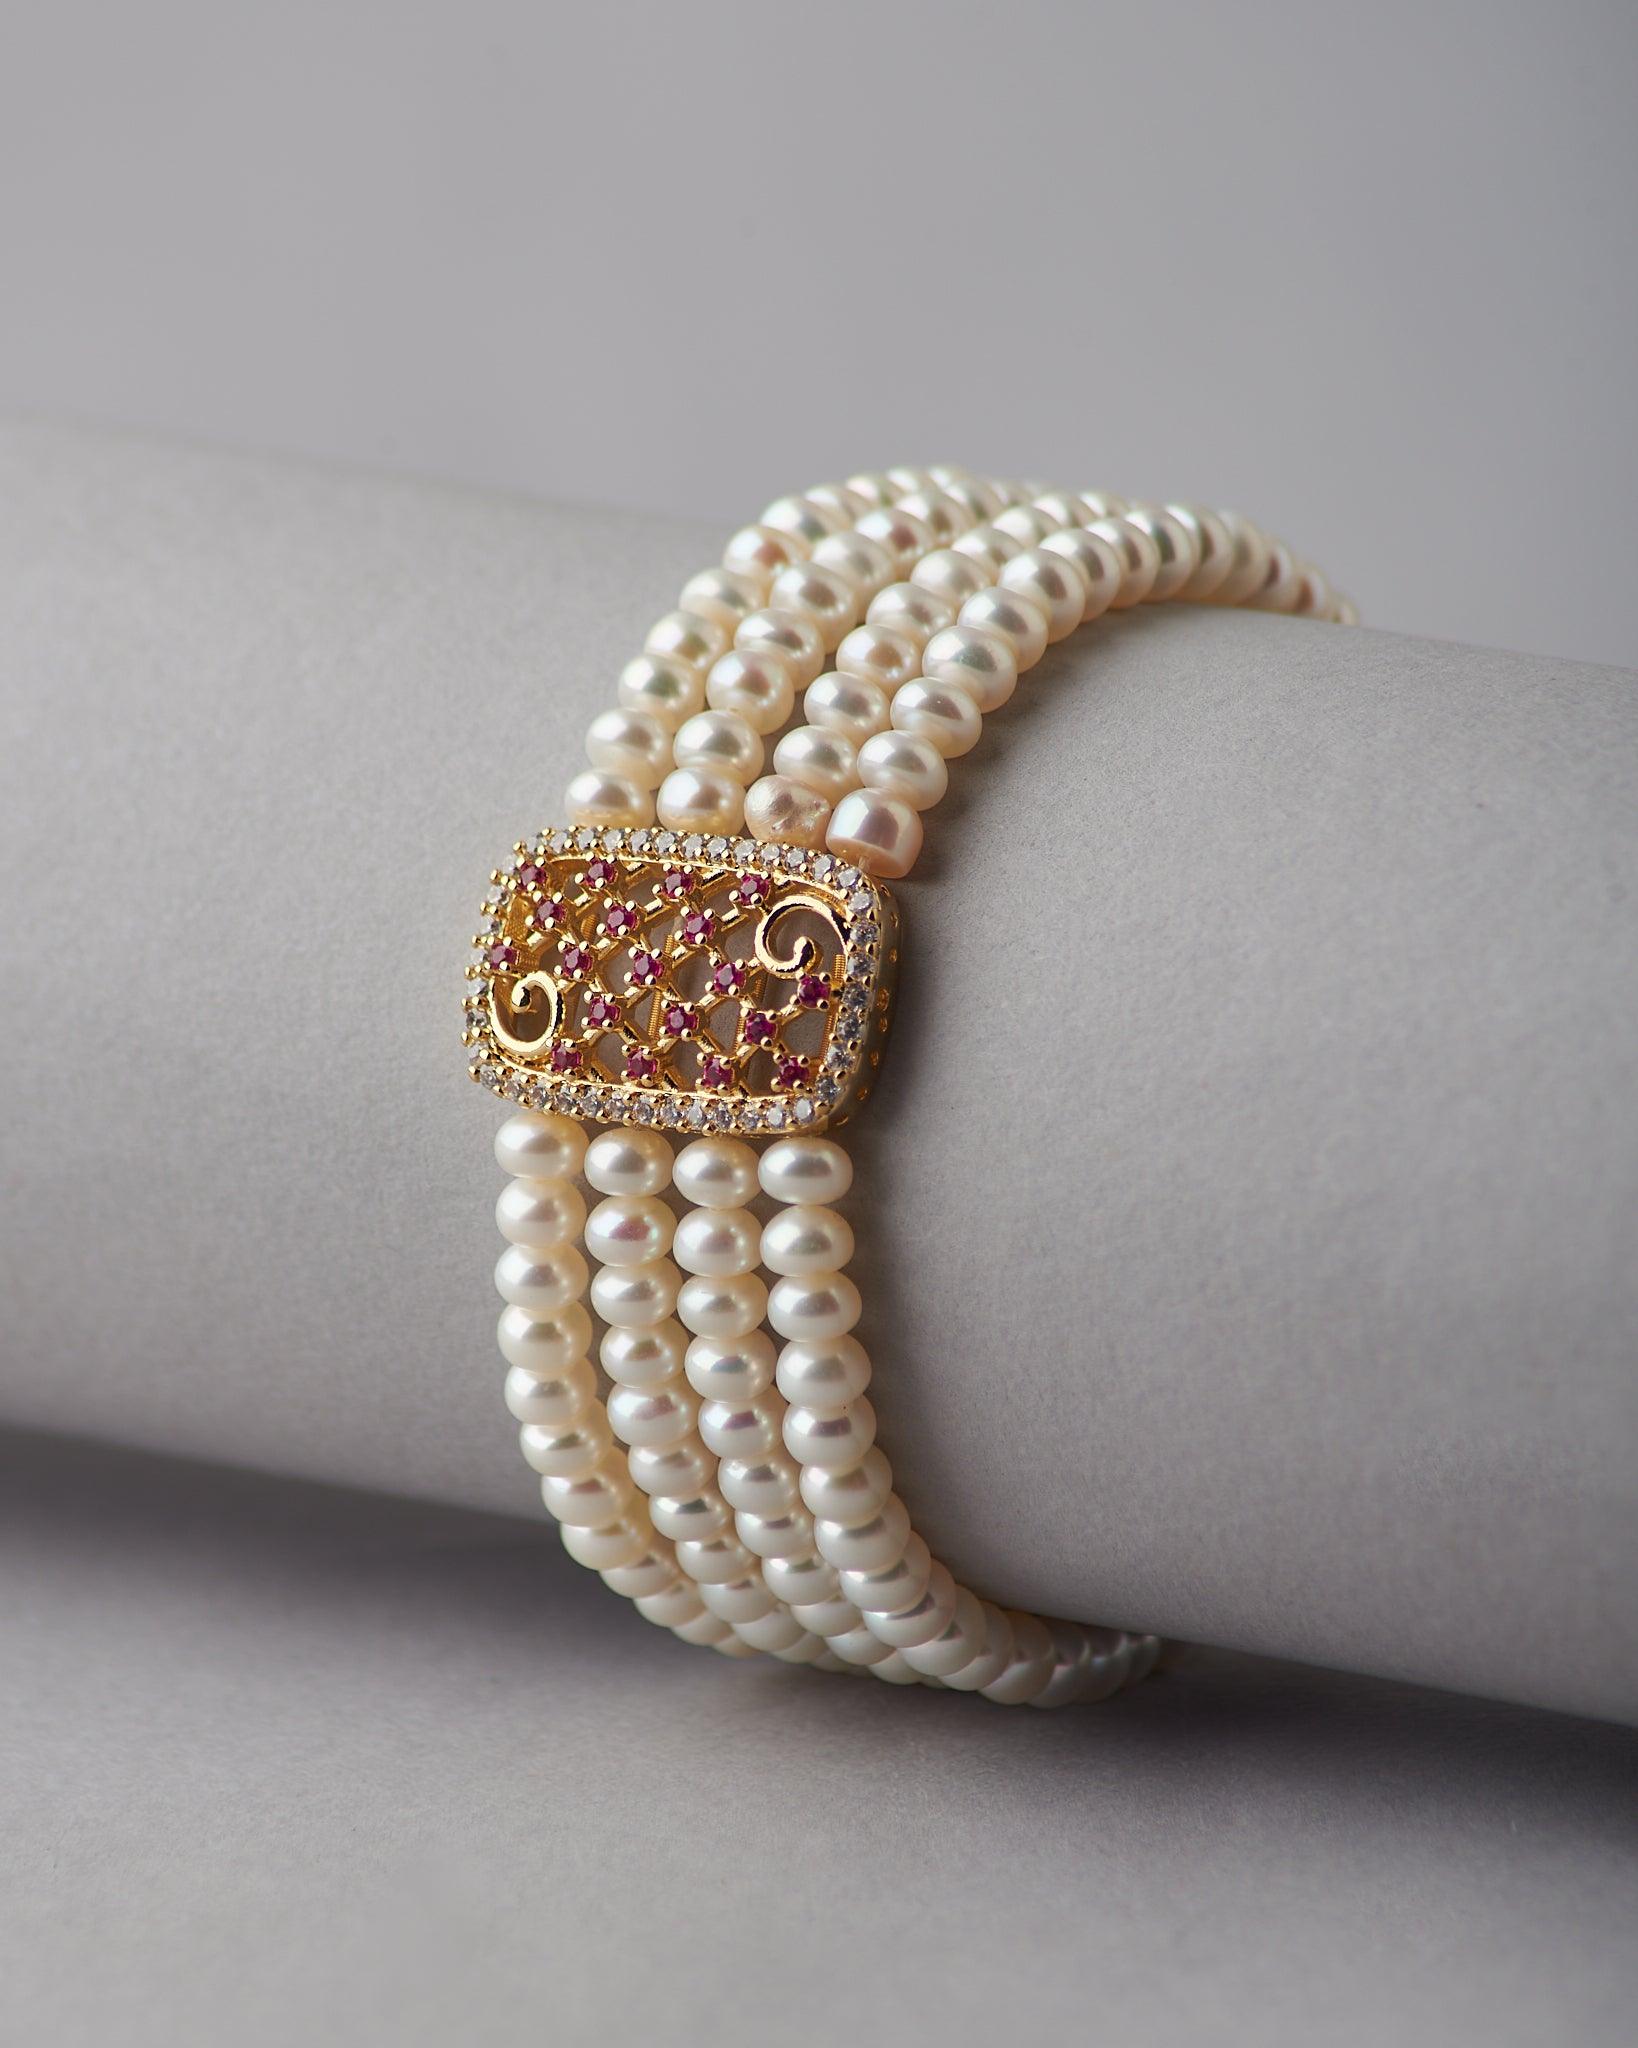 Traditional Stone Studded Rani Har with Bracelet - Chandrani Pearls